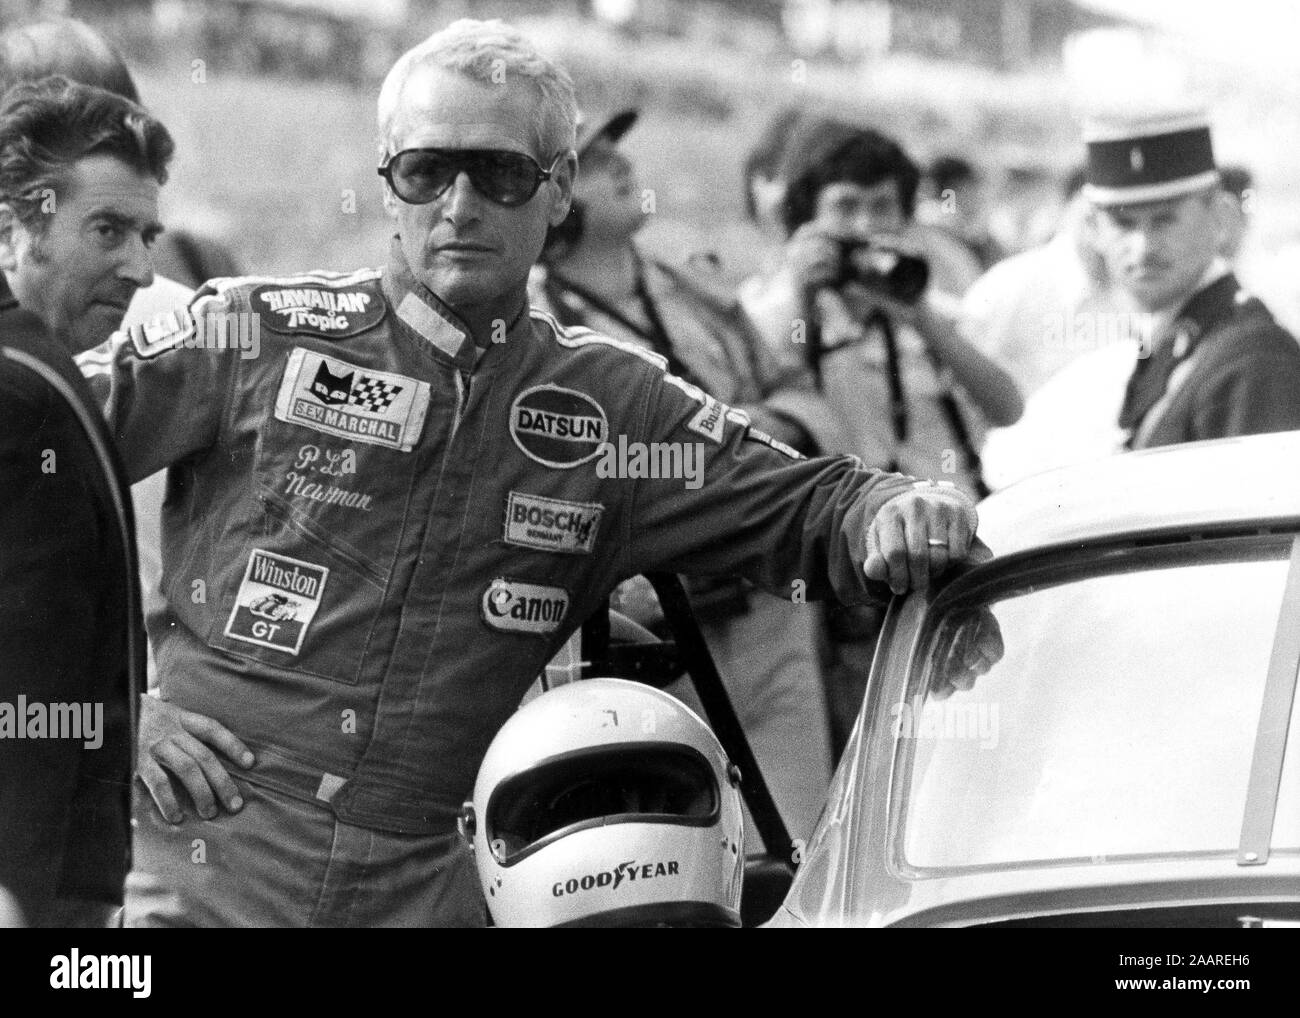 Paul newman car racing hi-res stock photography and images - Alamy